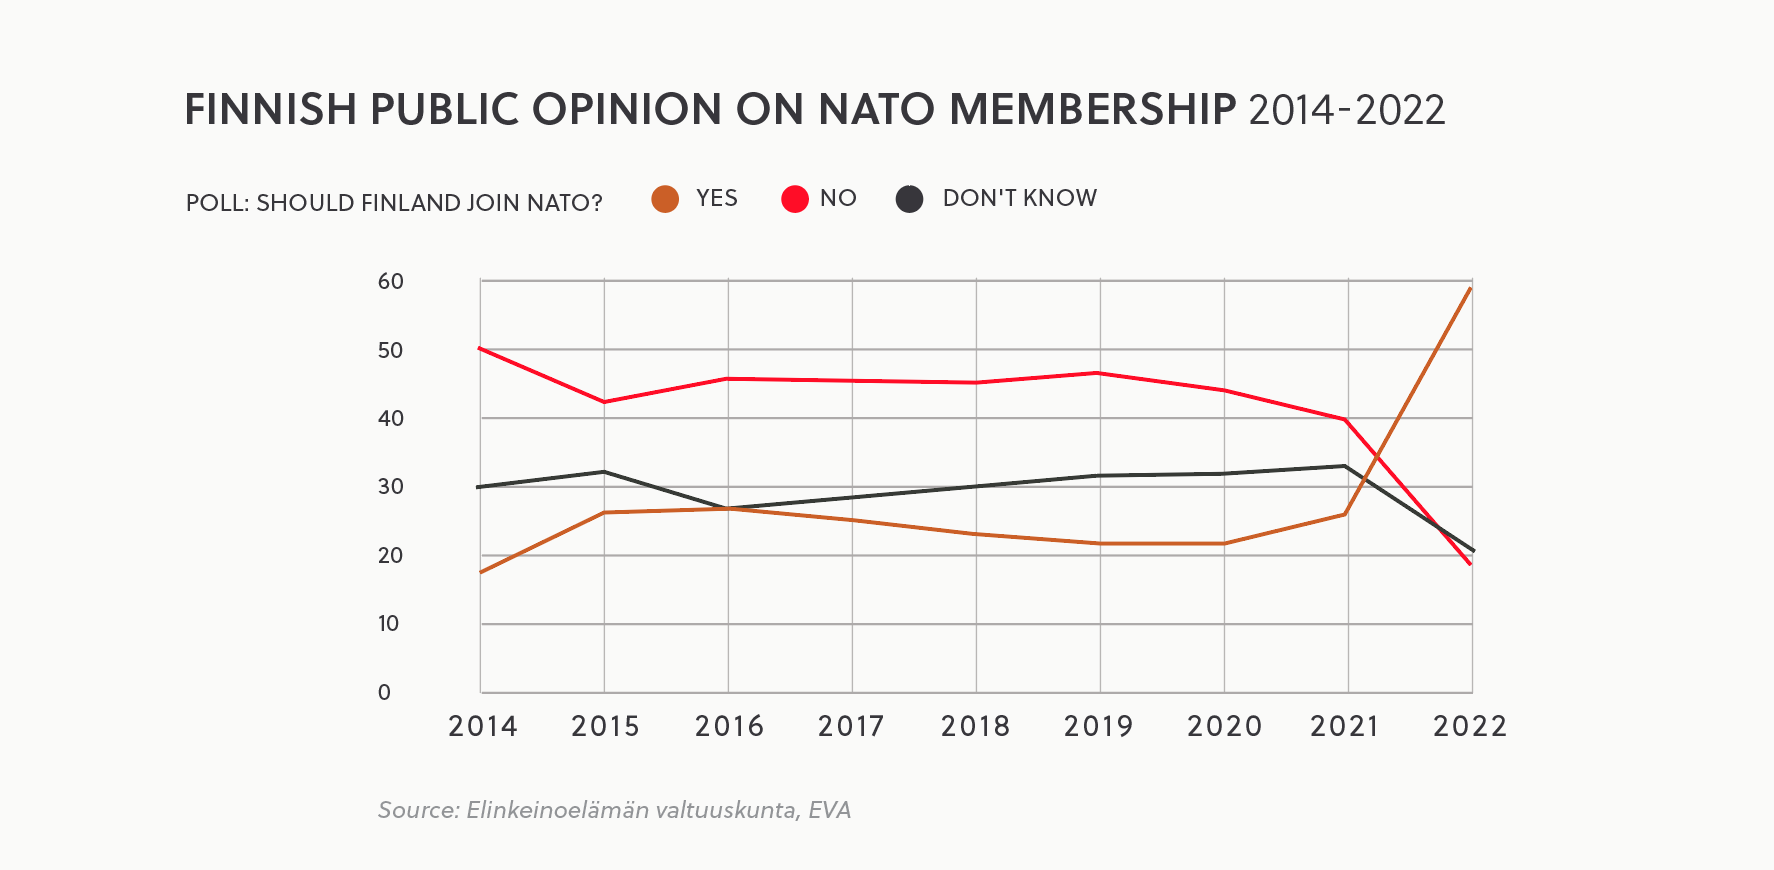 Finnish public opinion on NATO membership 2014-2022